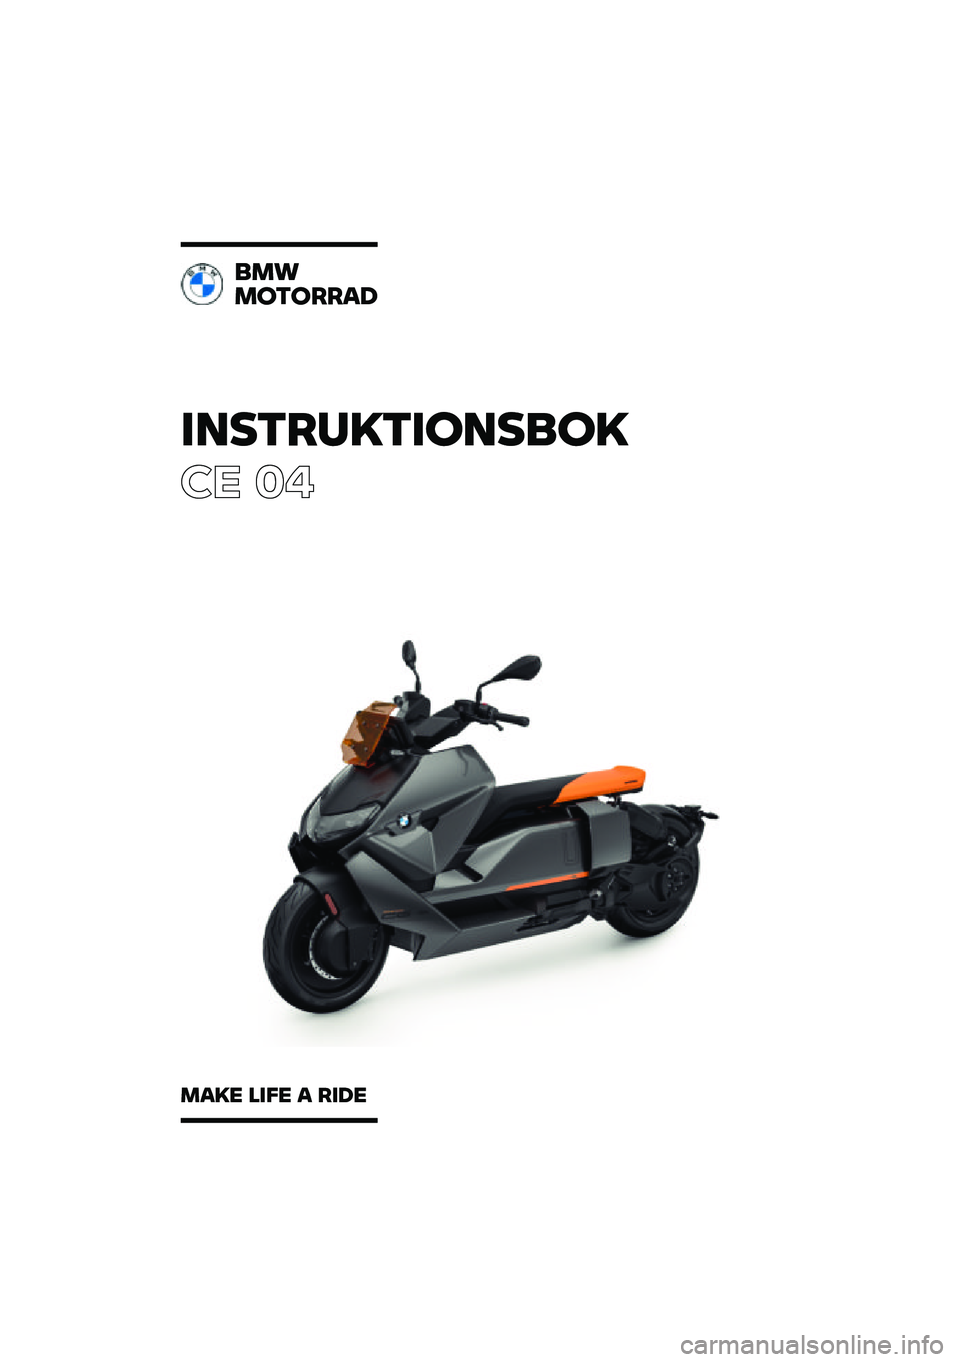 BMW MOTORRAD CE 04 2021  Instruktionsbok (in Swedish) �������\b���	���
�	�\b
�� ��
�
��\f
��	��	���
�
��
�\b� ���� �
 ���� 